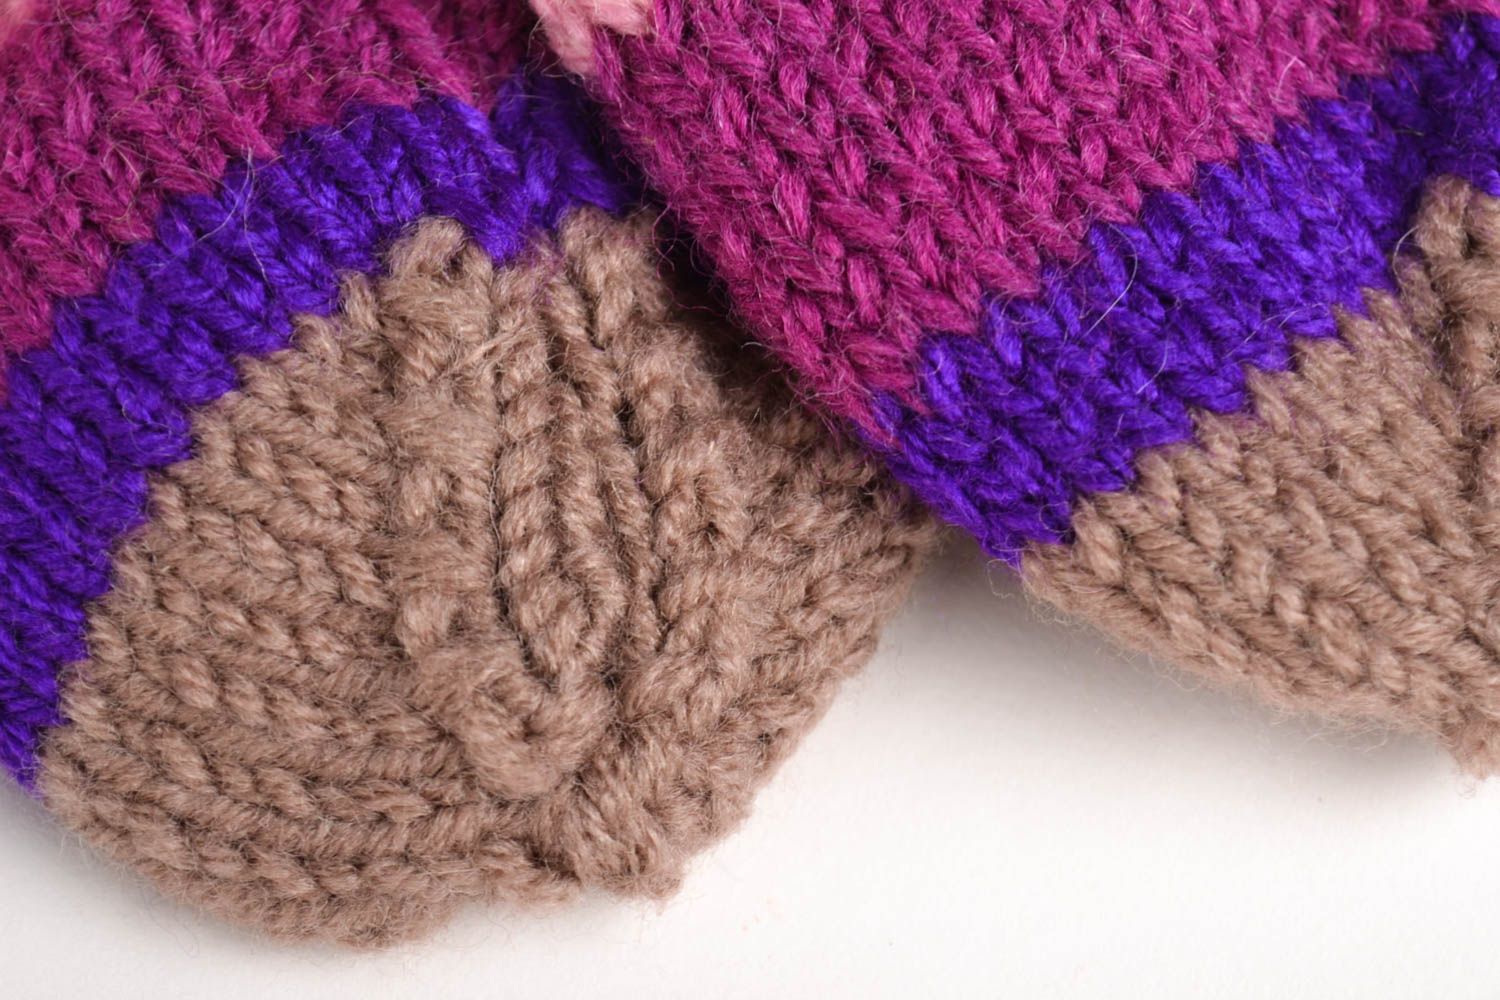 Beautiful handmade knitted socks warm socks for women winter socks gifts for her photo 3